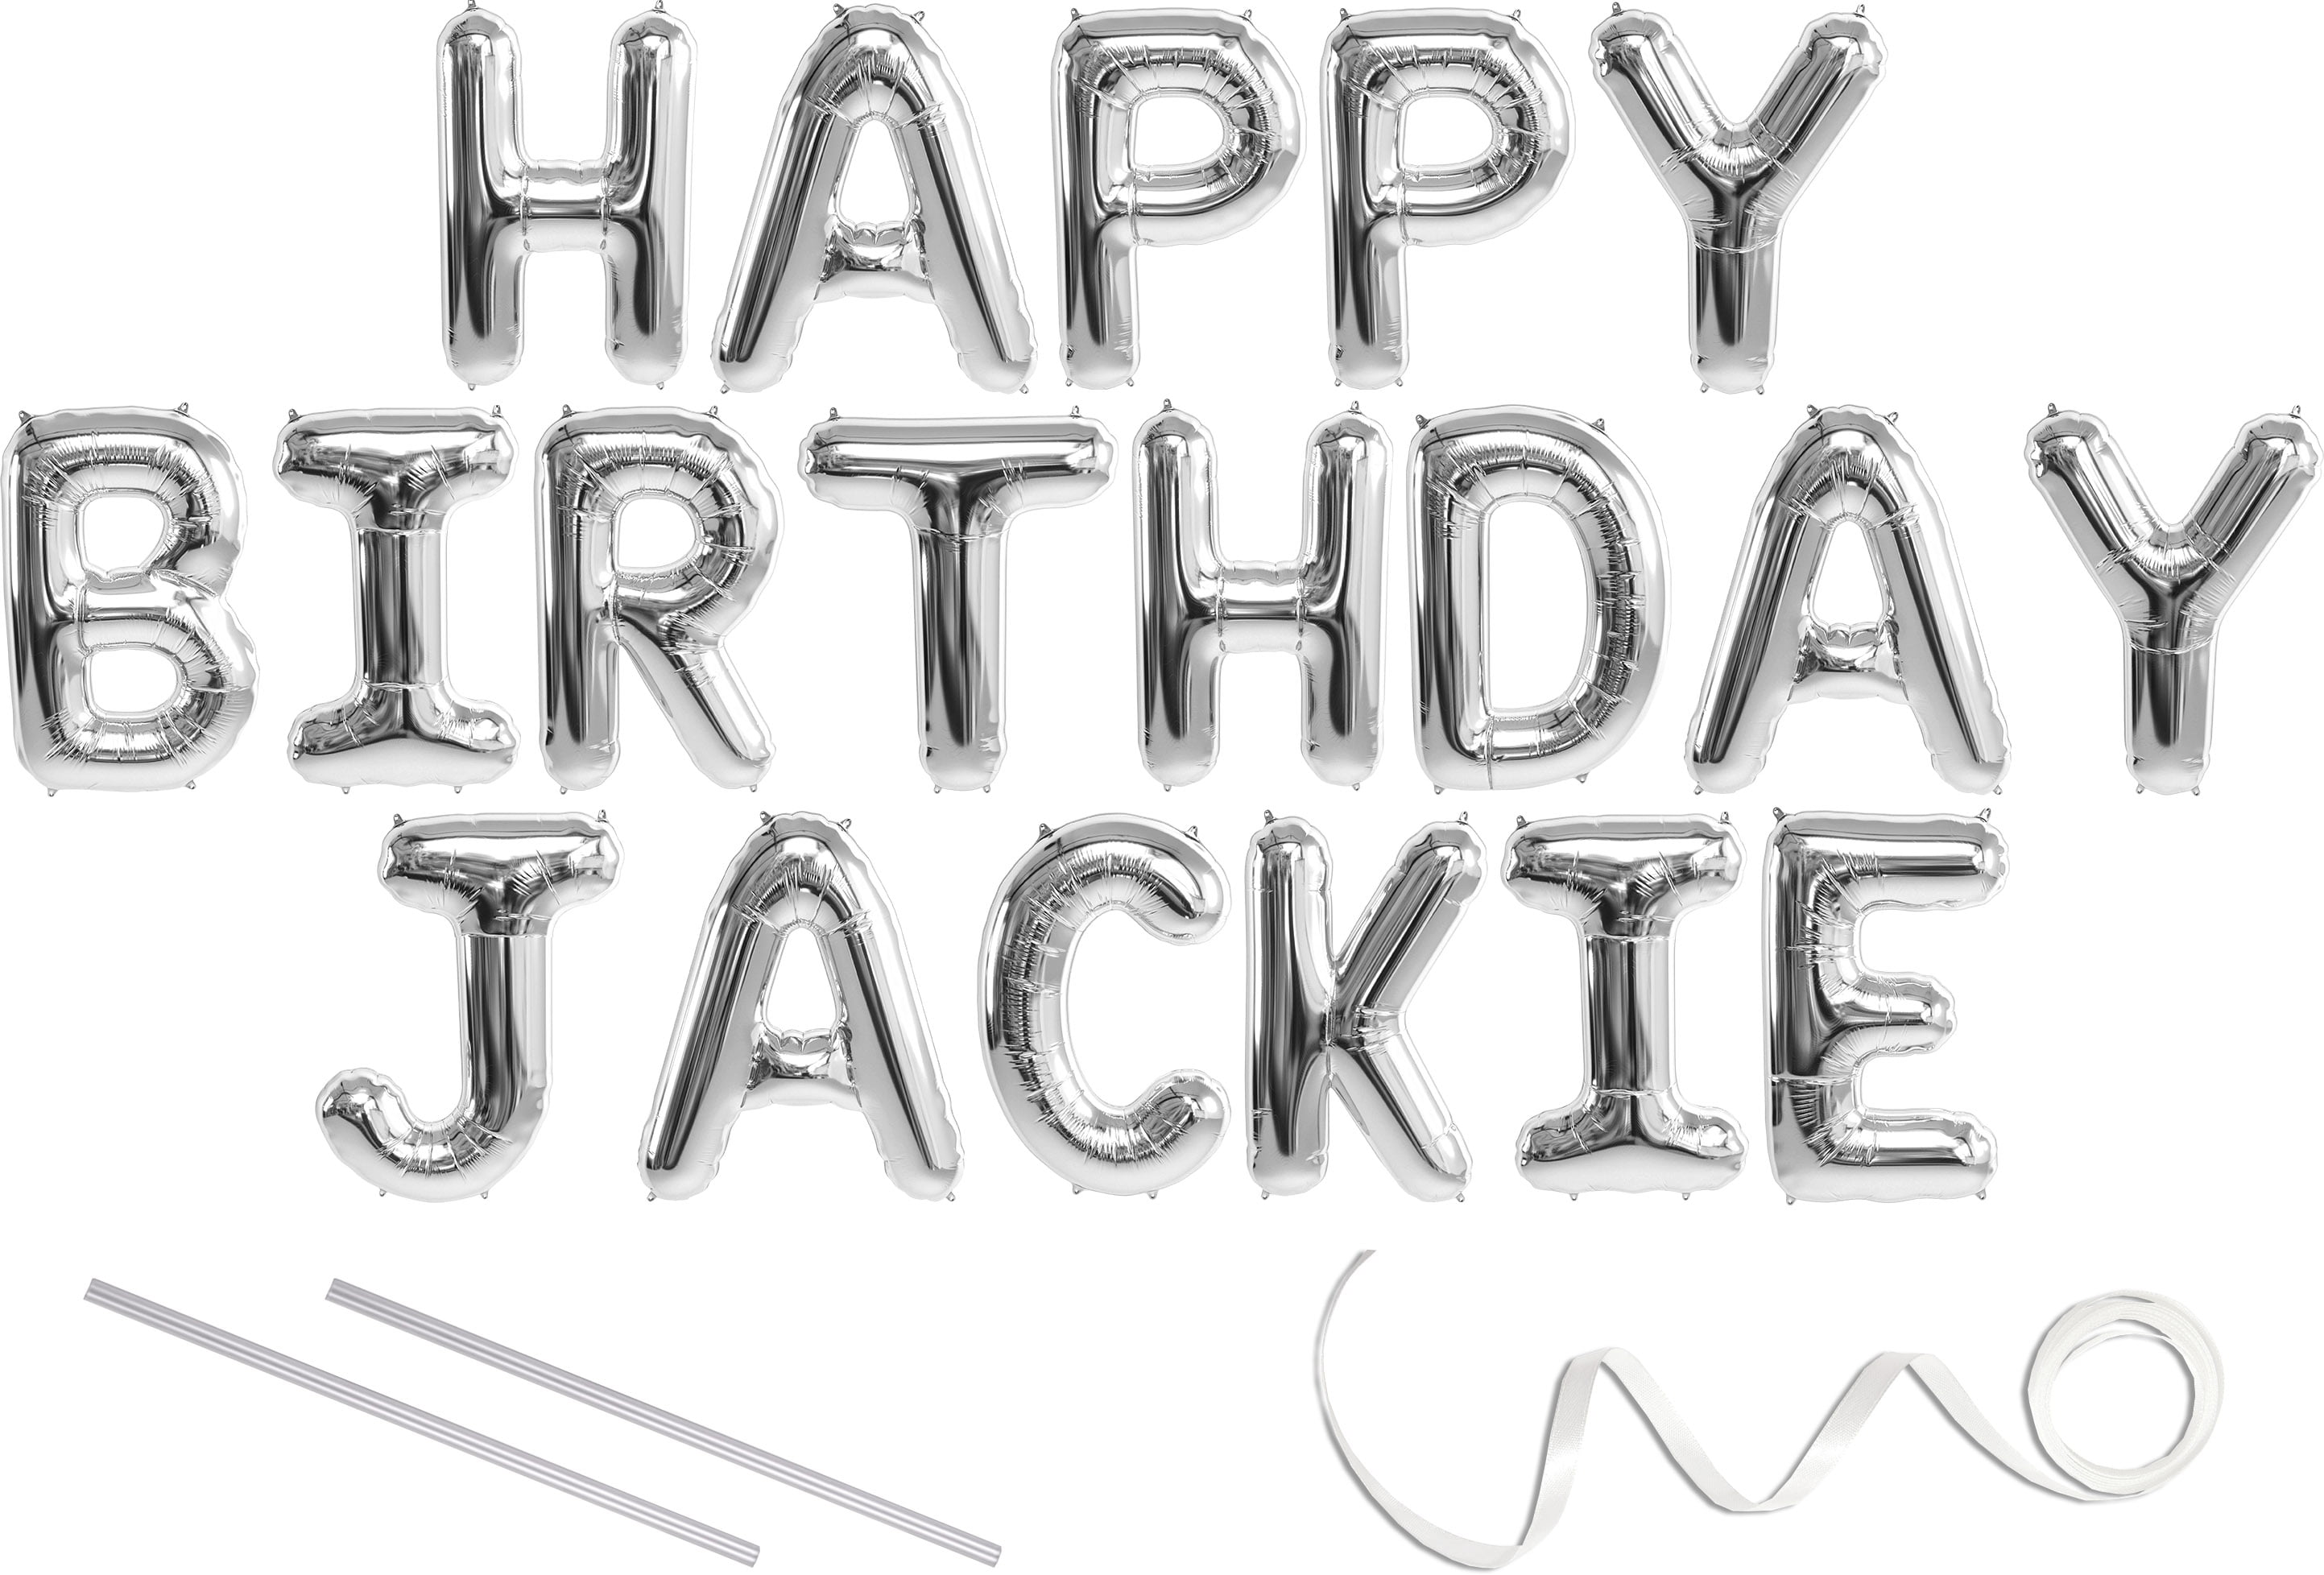 happy birthday jackie balloons